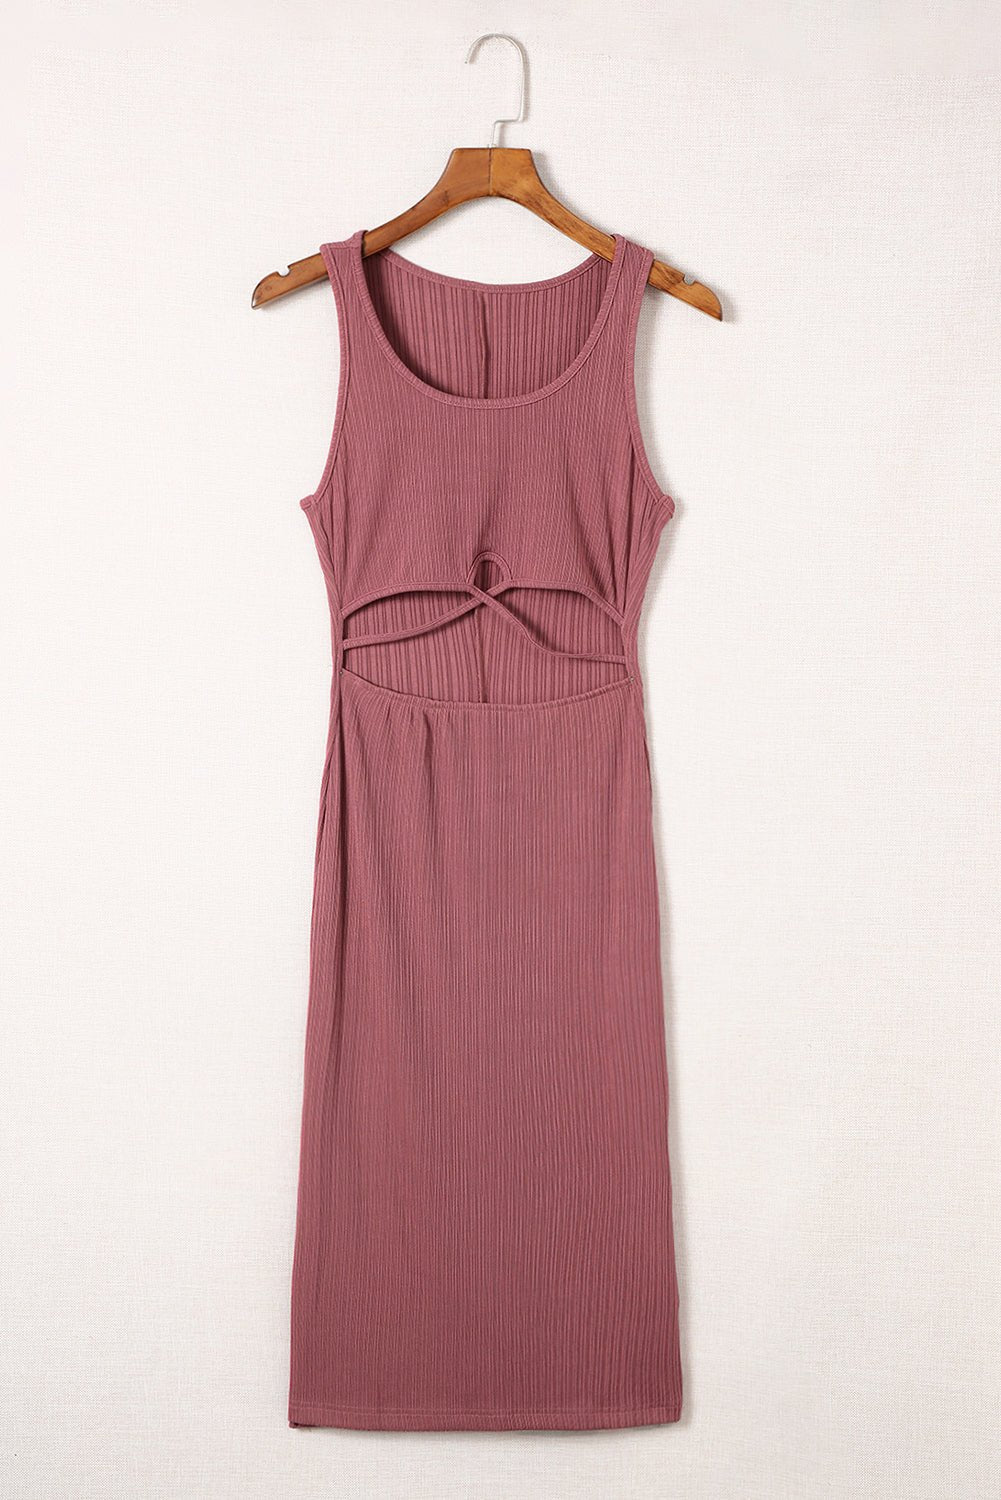 Crisscross Cutout Scoop Neck Slit Midi Dress - Fashion Girl Online Store